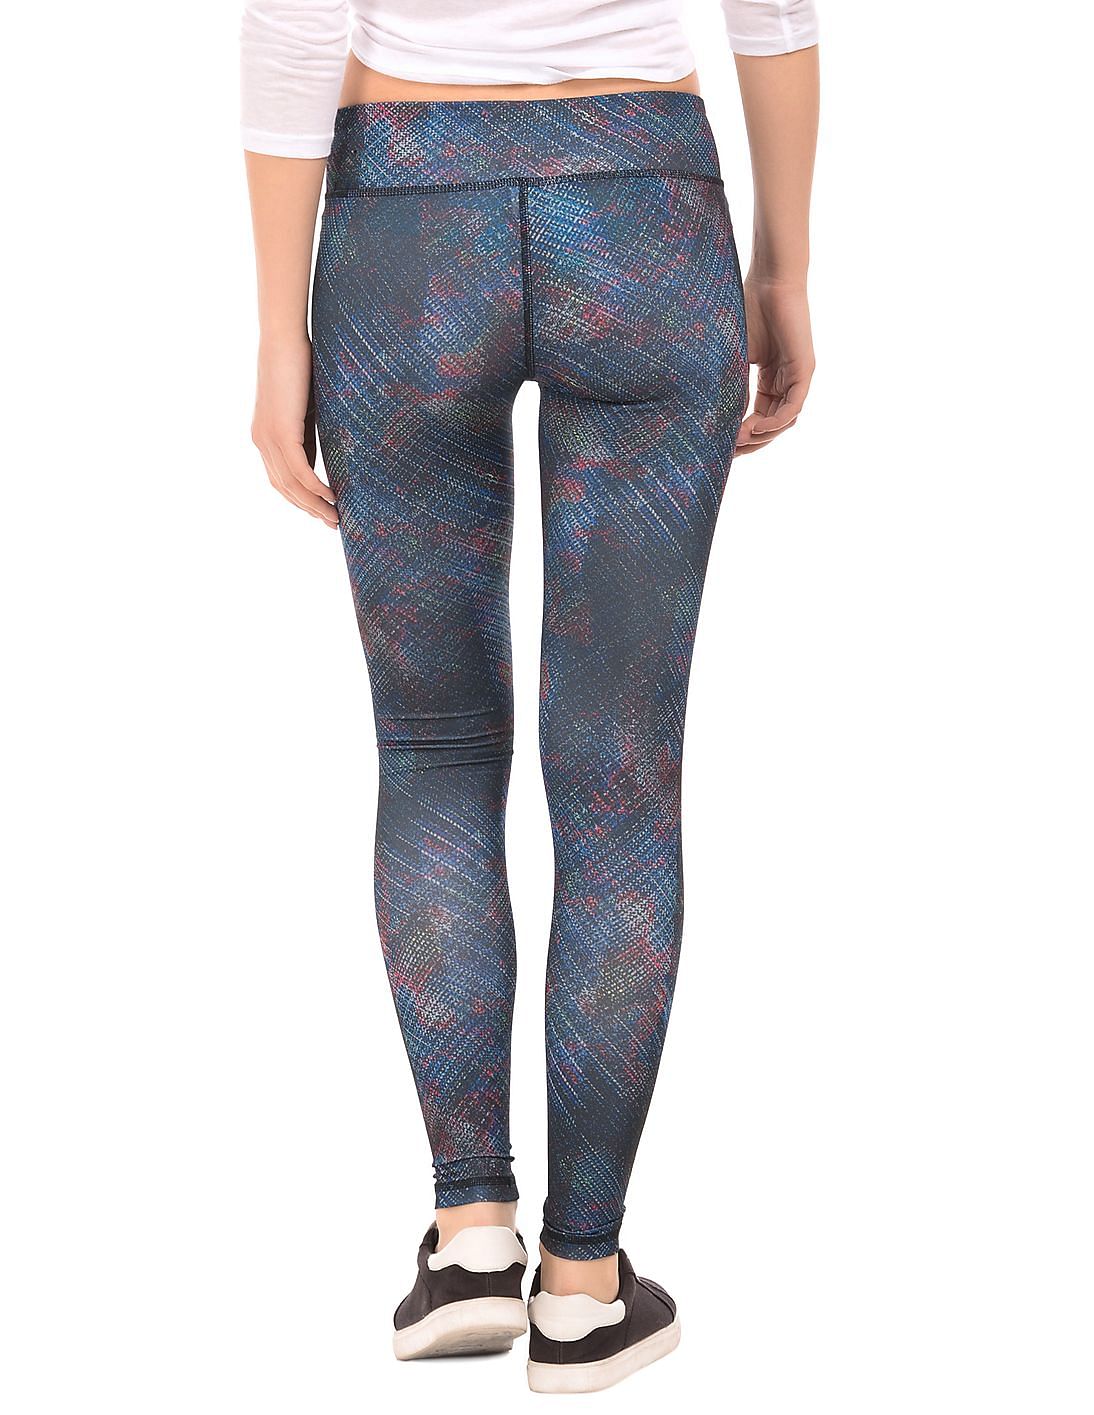 Buy a Aeropostale Womens Swirl Leggings Yoga Pants